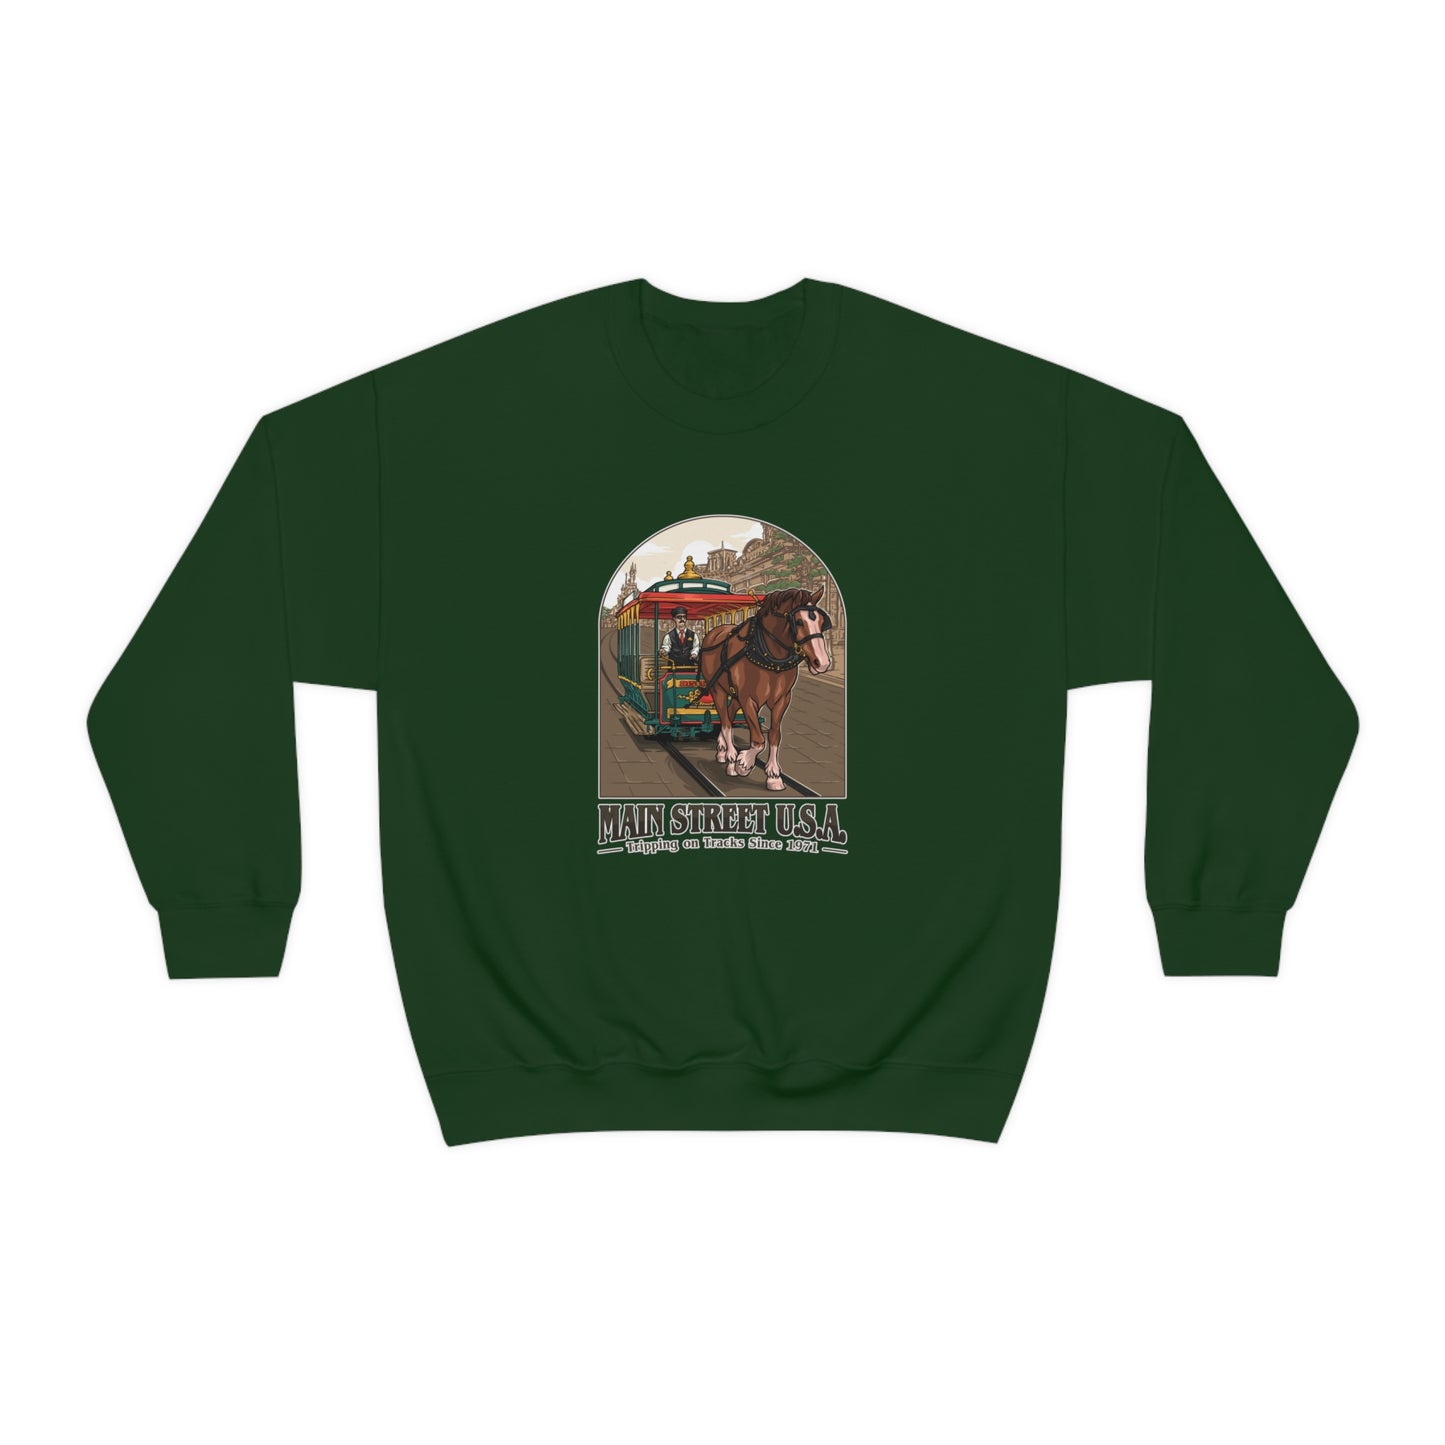 Main Street USA Trippin' - Adult Crewneck Sweatshirt